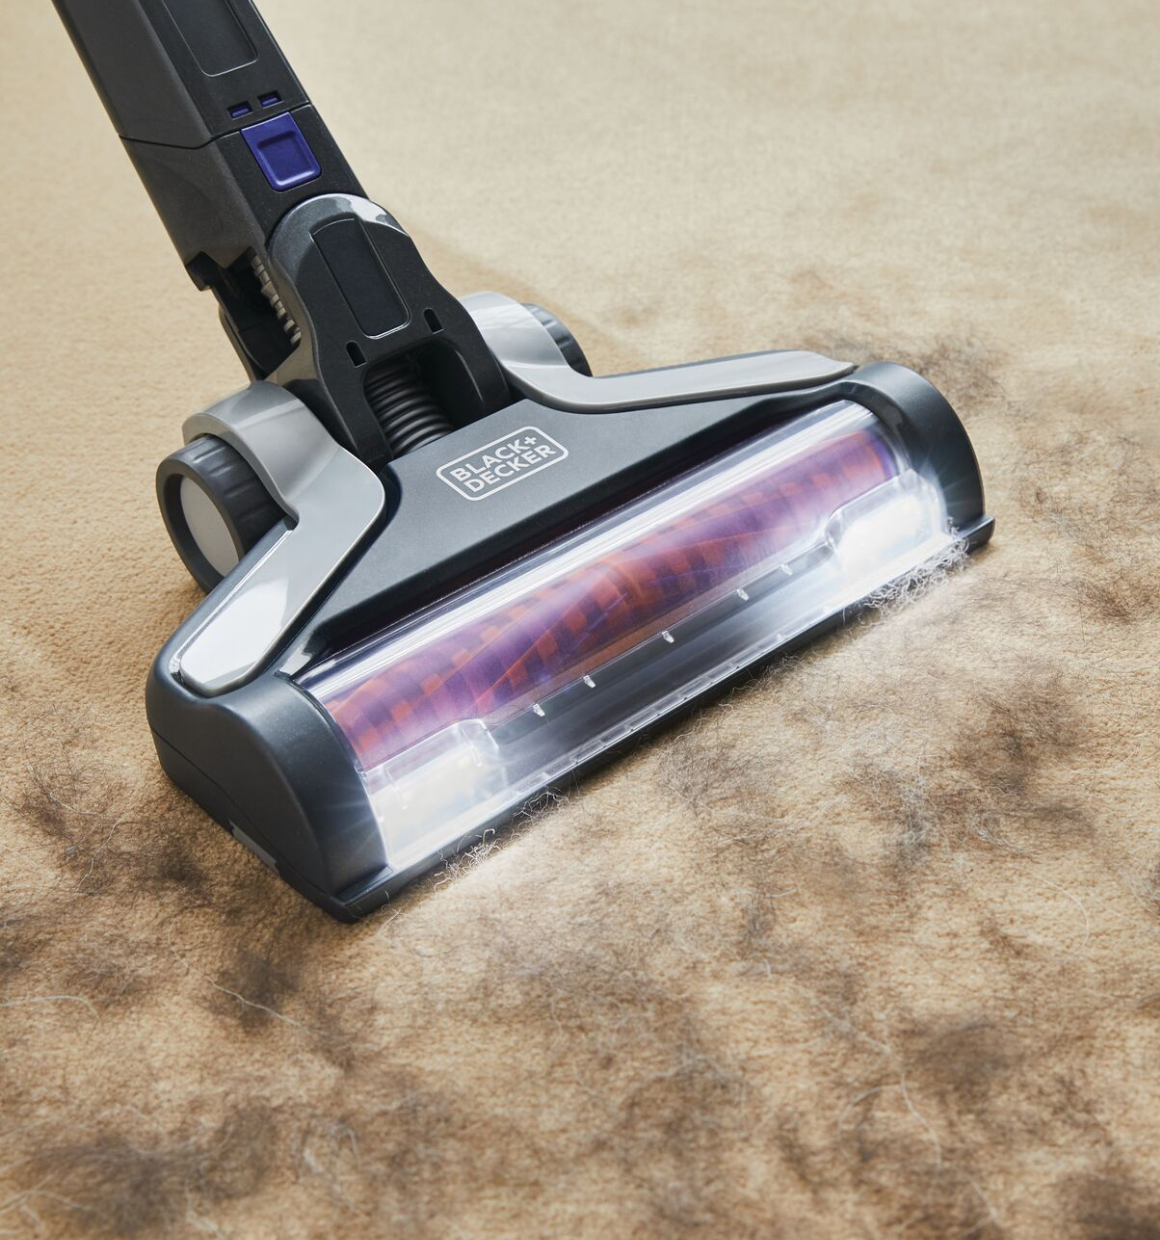 BLACK+DECKER™ POWERSERIES Extreme Pet Cordless Stick Vacuum Cleaner